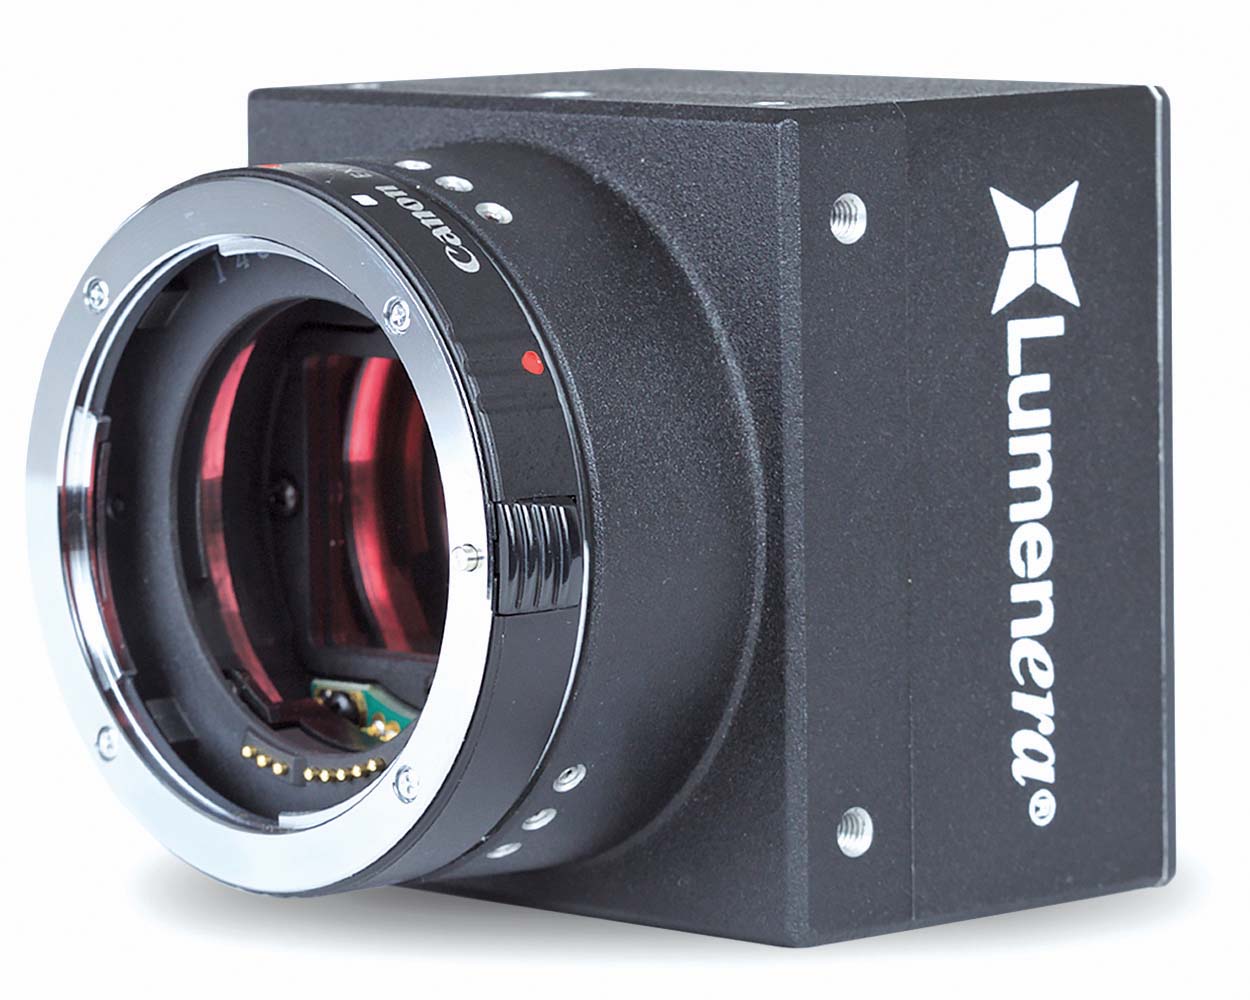 Lumenera's latest  Lt16059H camera